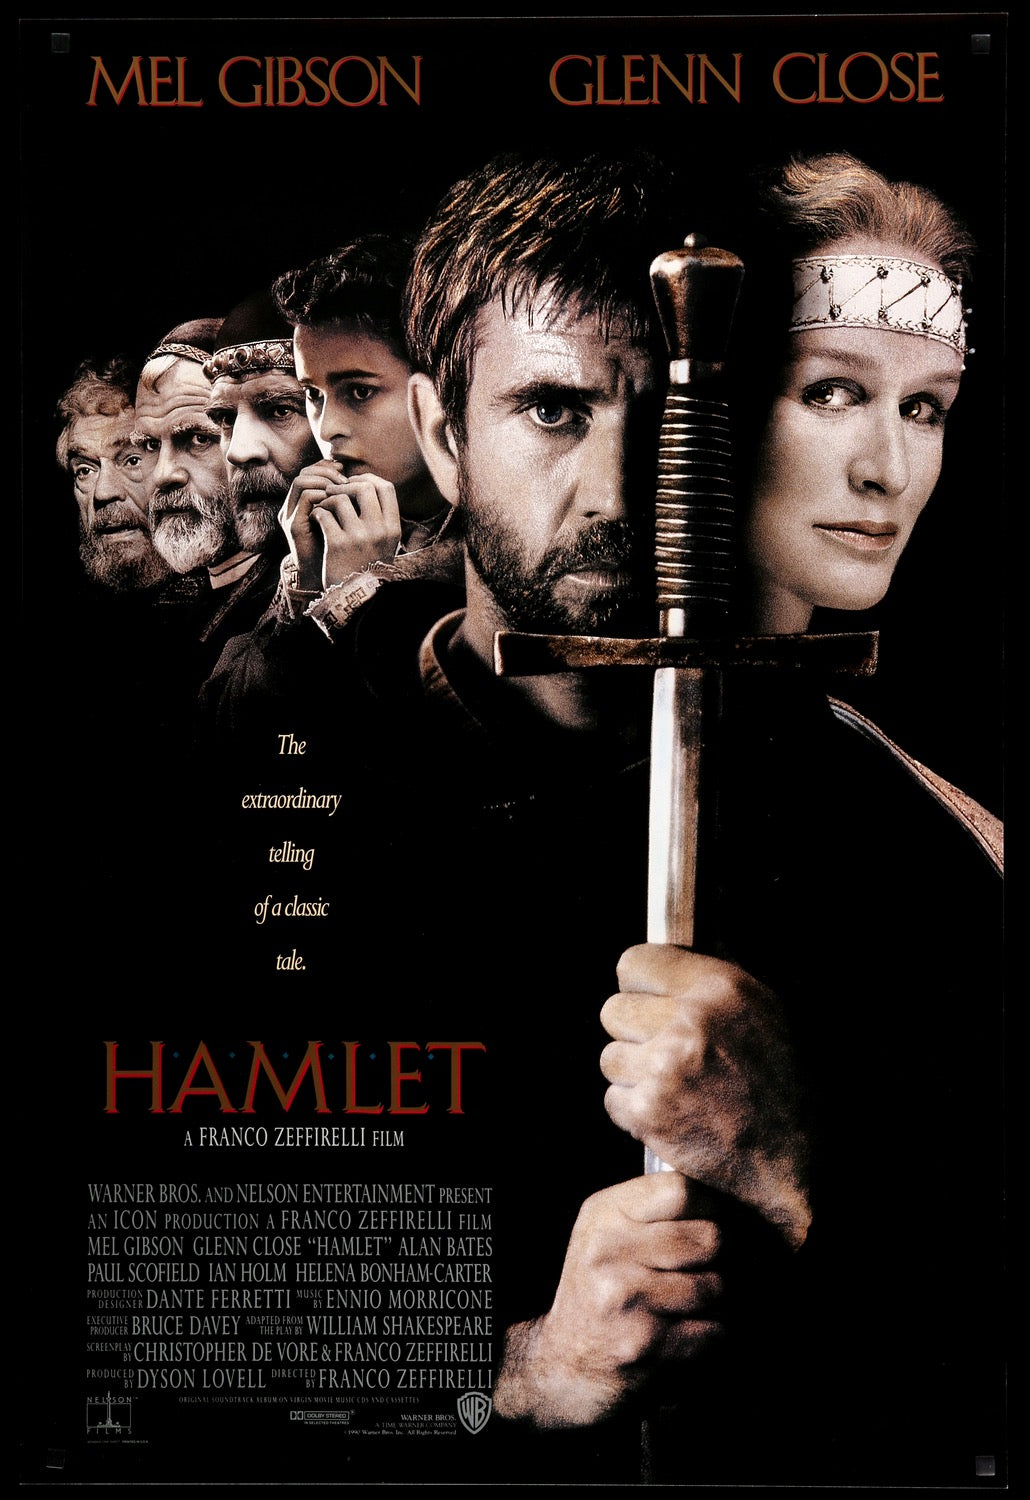 Hamlet (1990) original movie poster for sale at Original Film Art